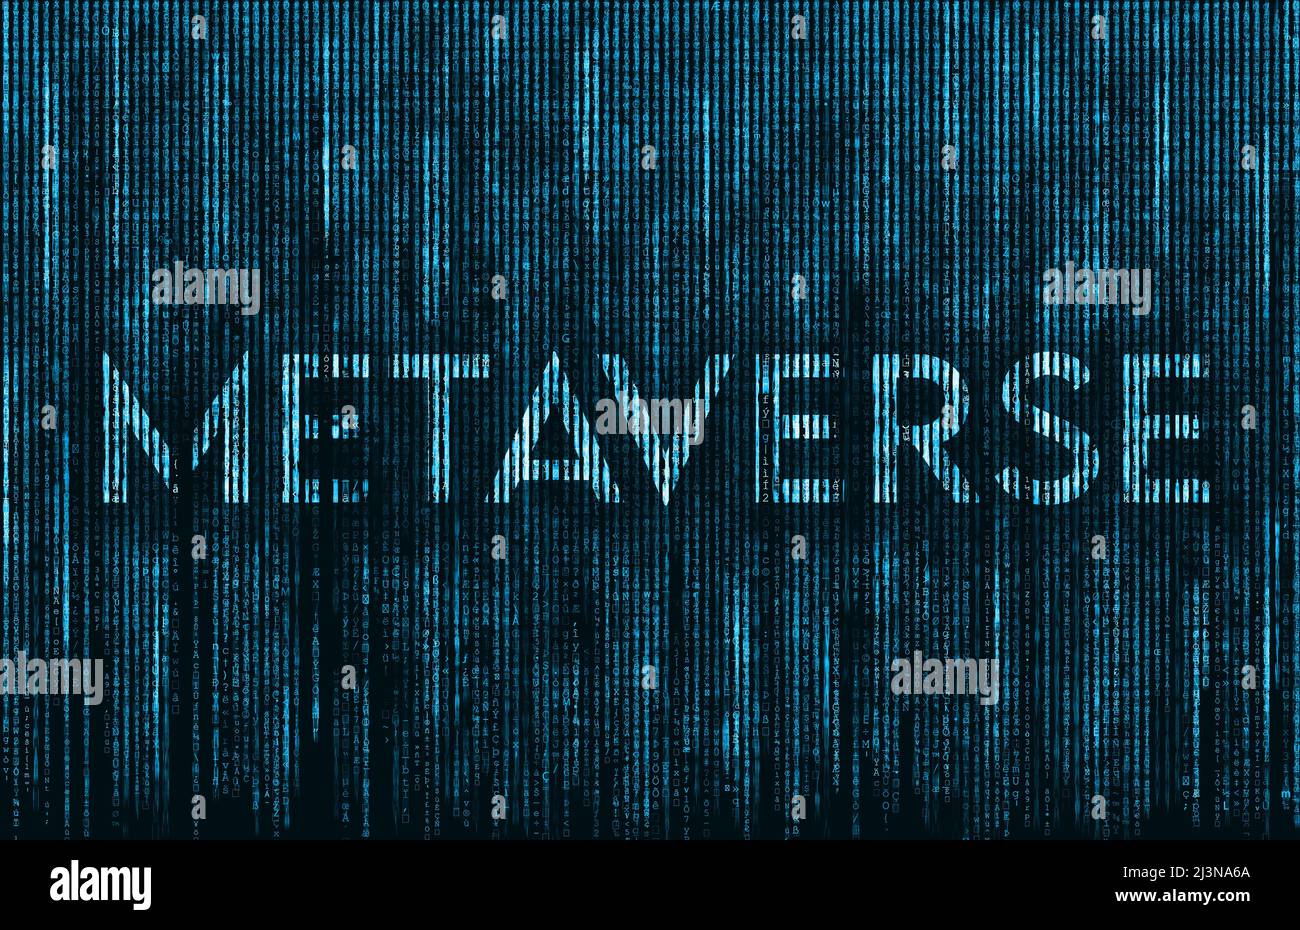 Metaverse - matrix desgin letters Stock Photo